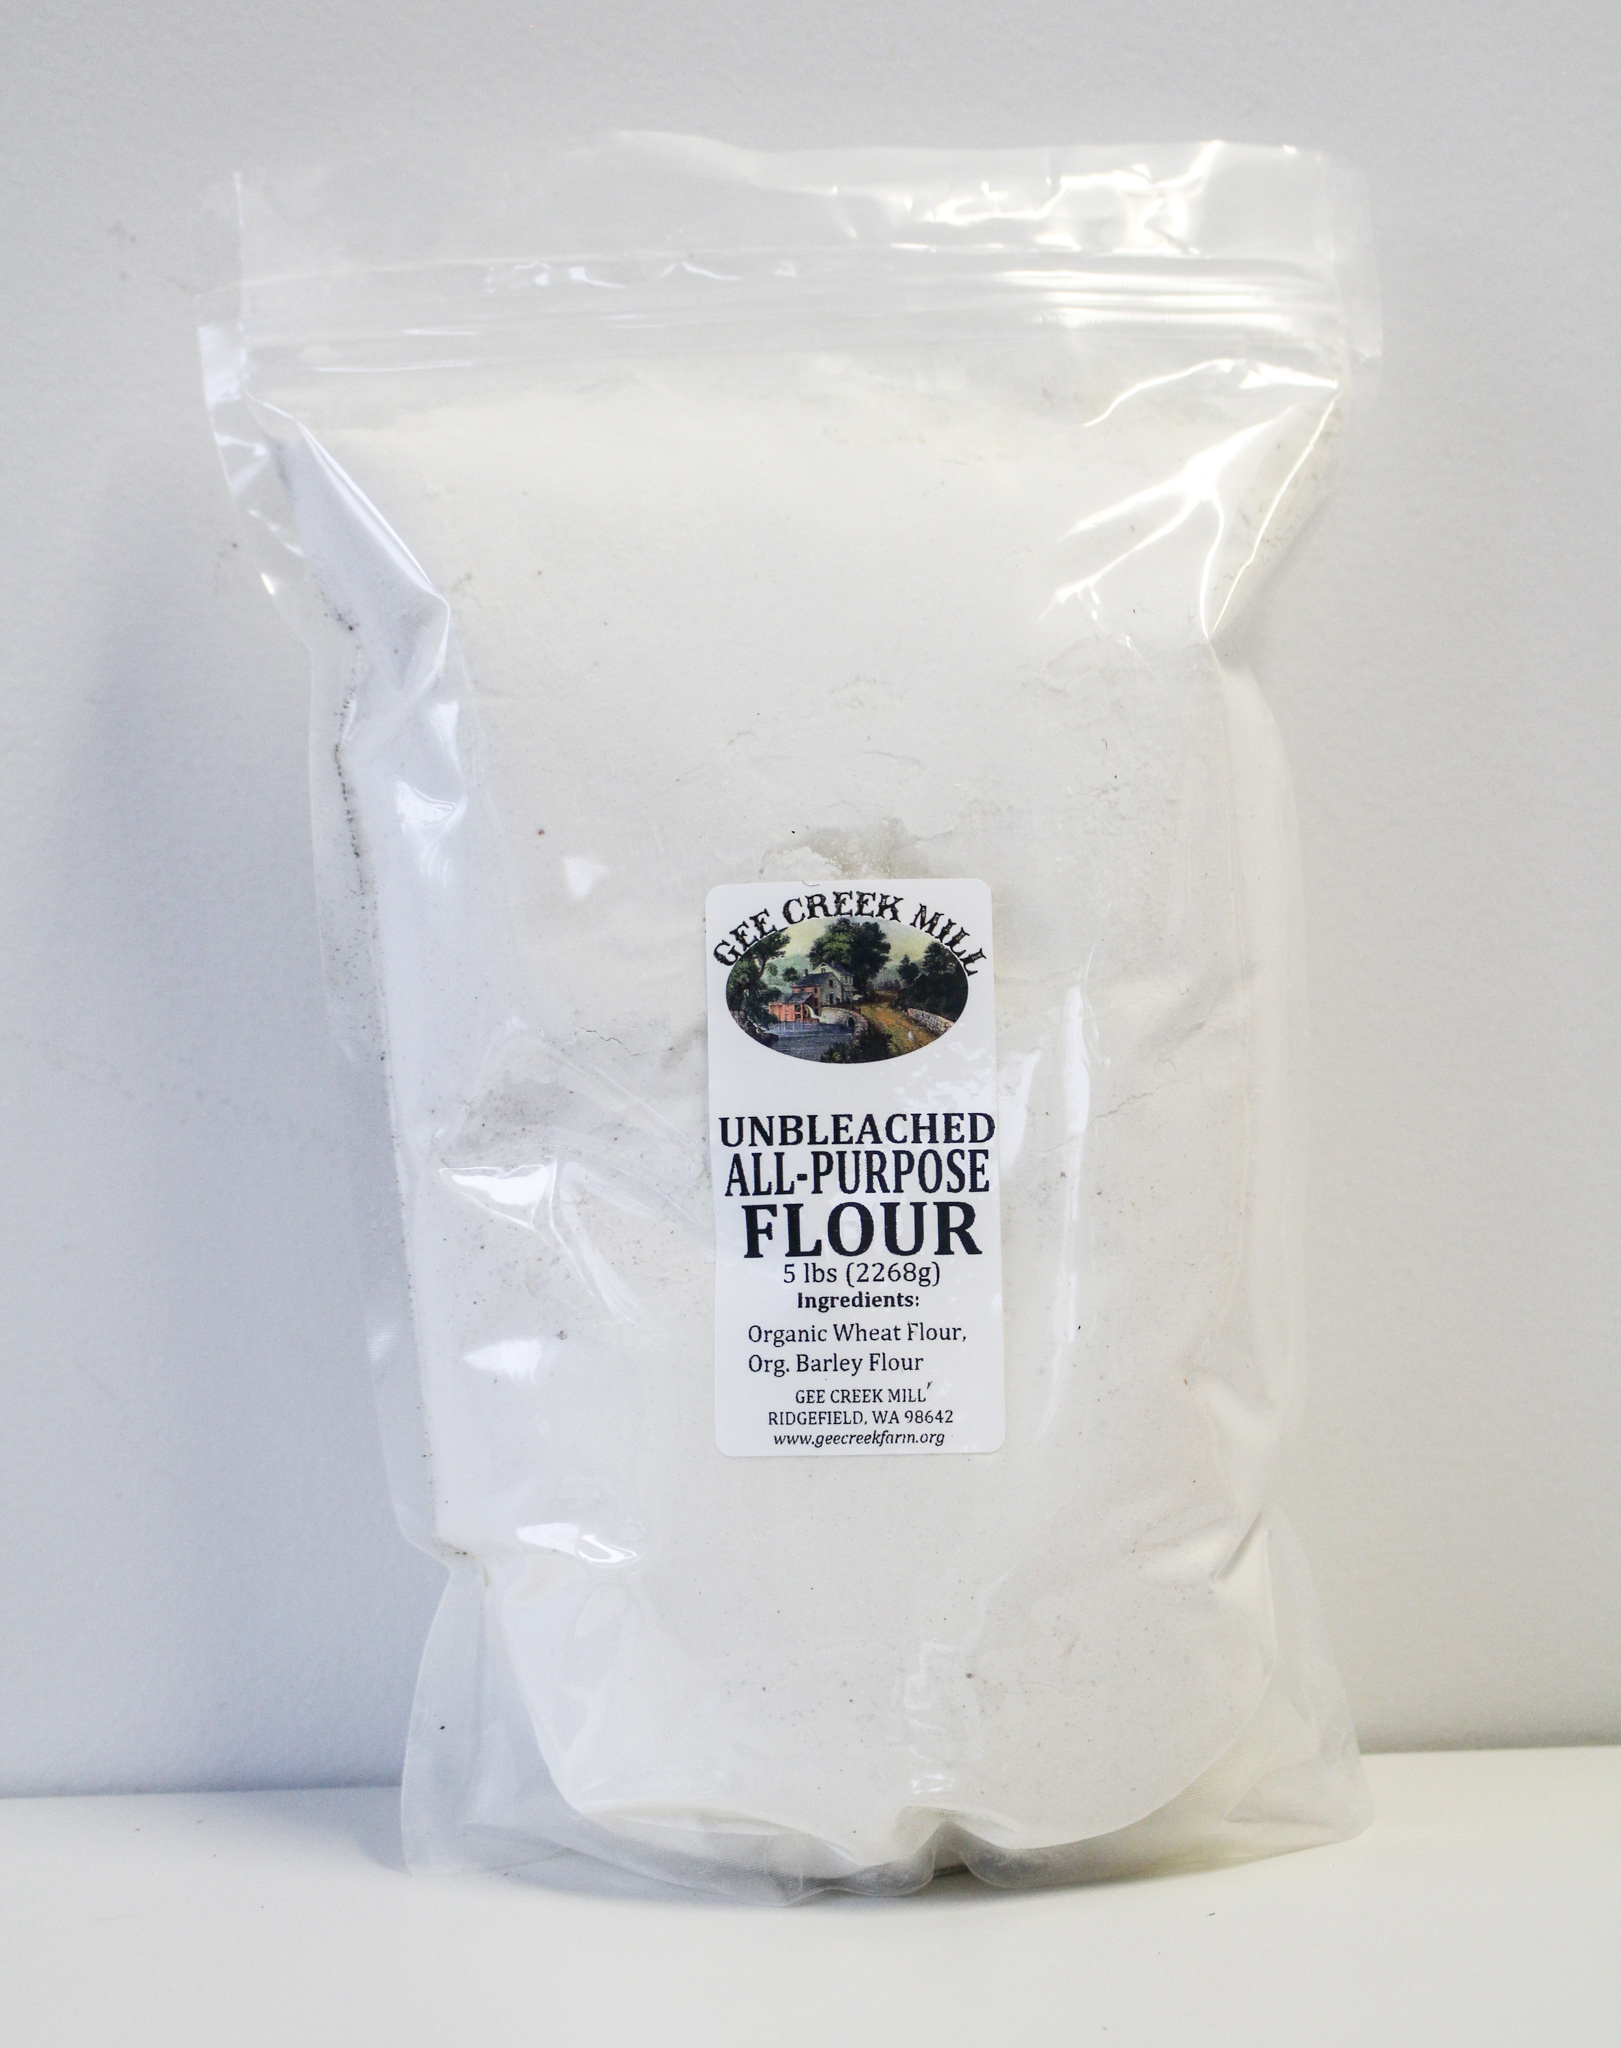 Gee Creek Organic All-Purpose Flour